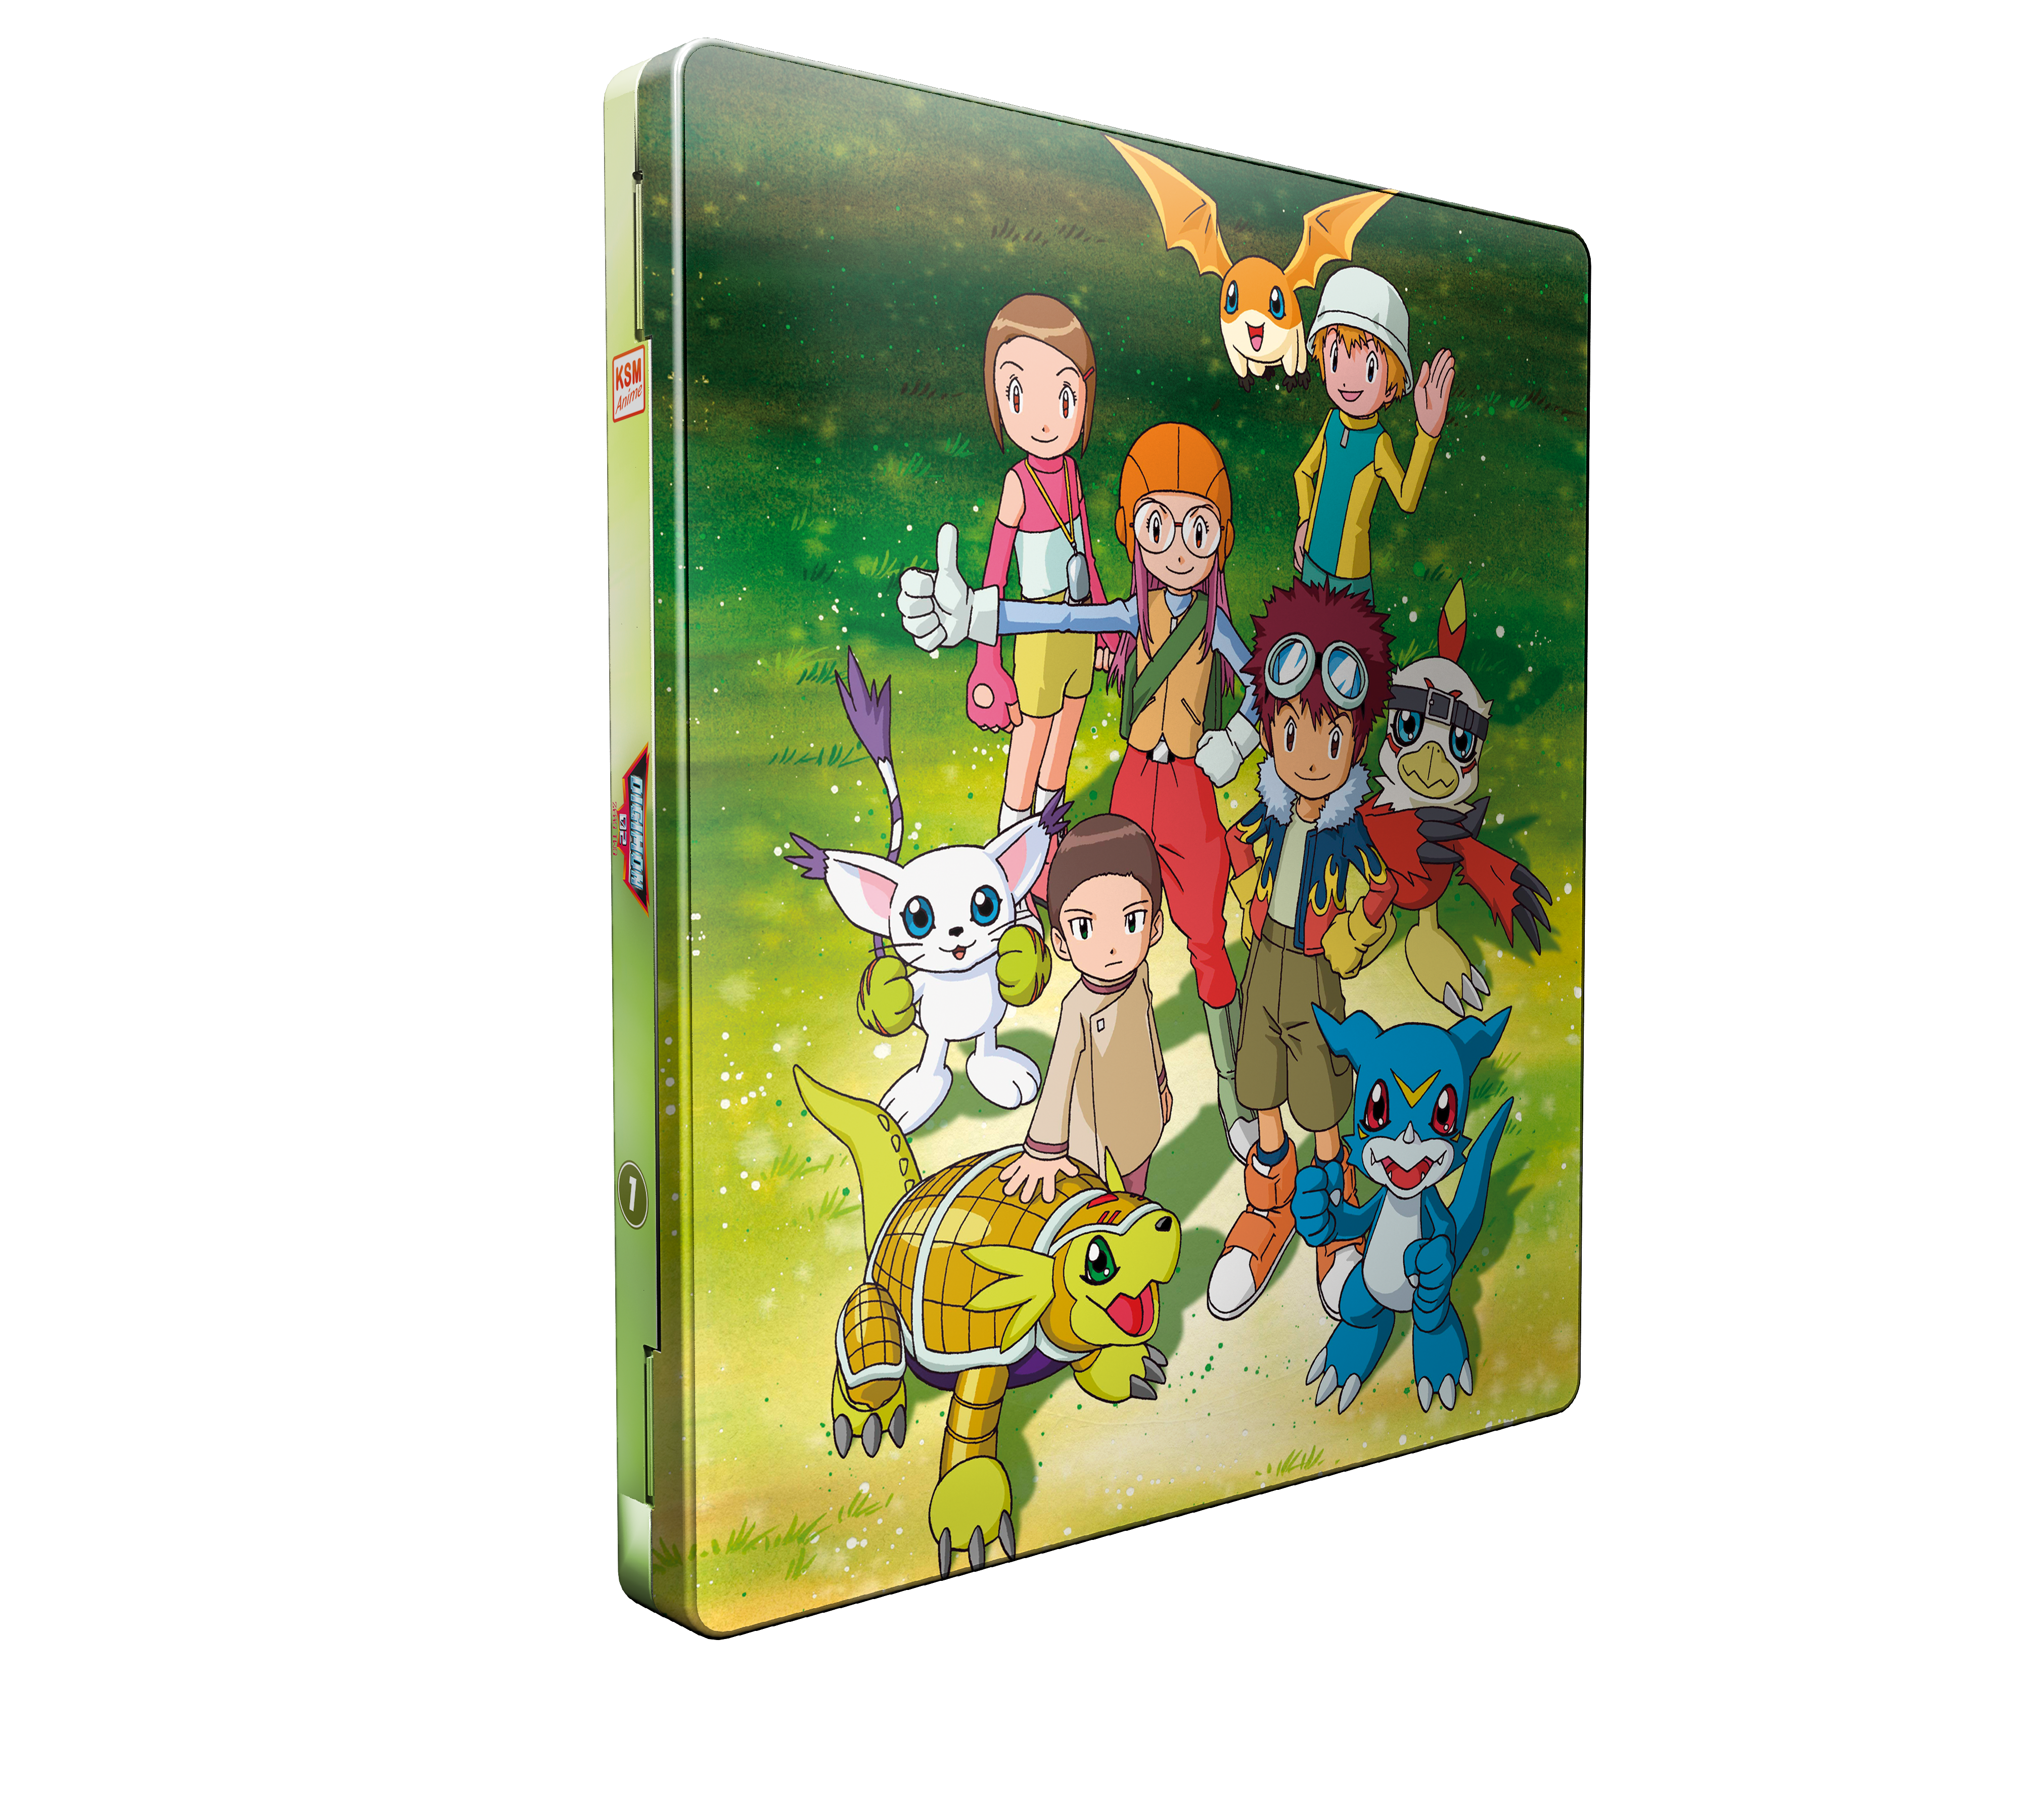 Digimon Adventure 02 - Volume 1 - Limited Edition: Episode 01-17 im FuturePak [Blu-ray] Thumbnail 4